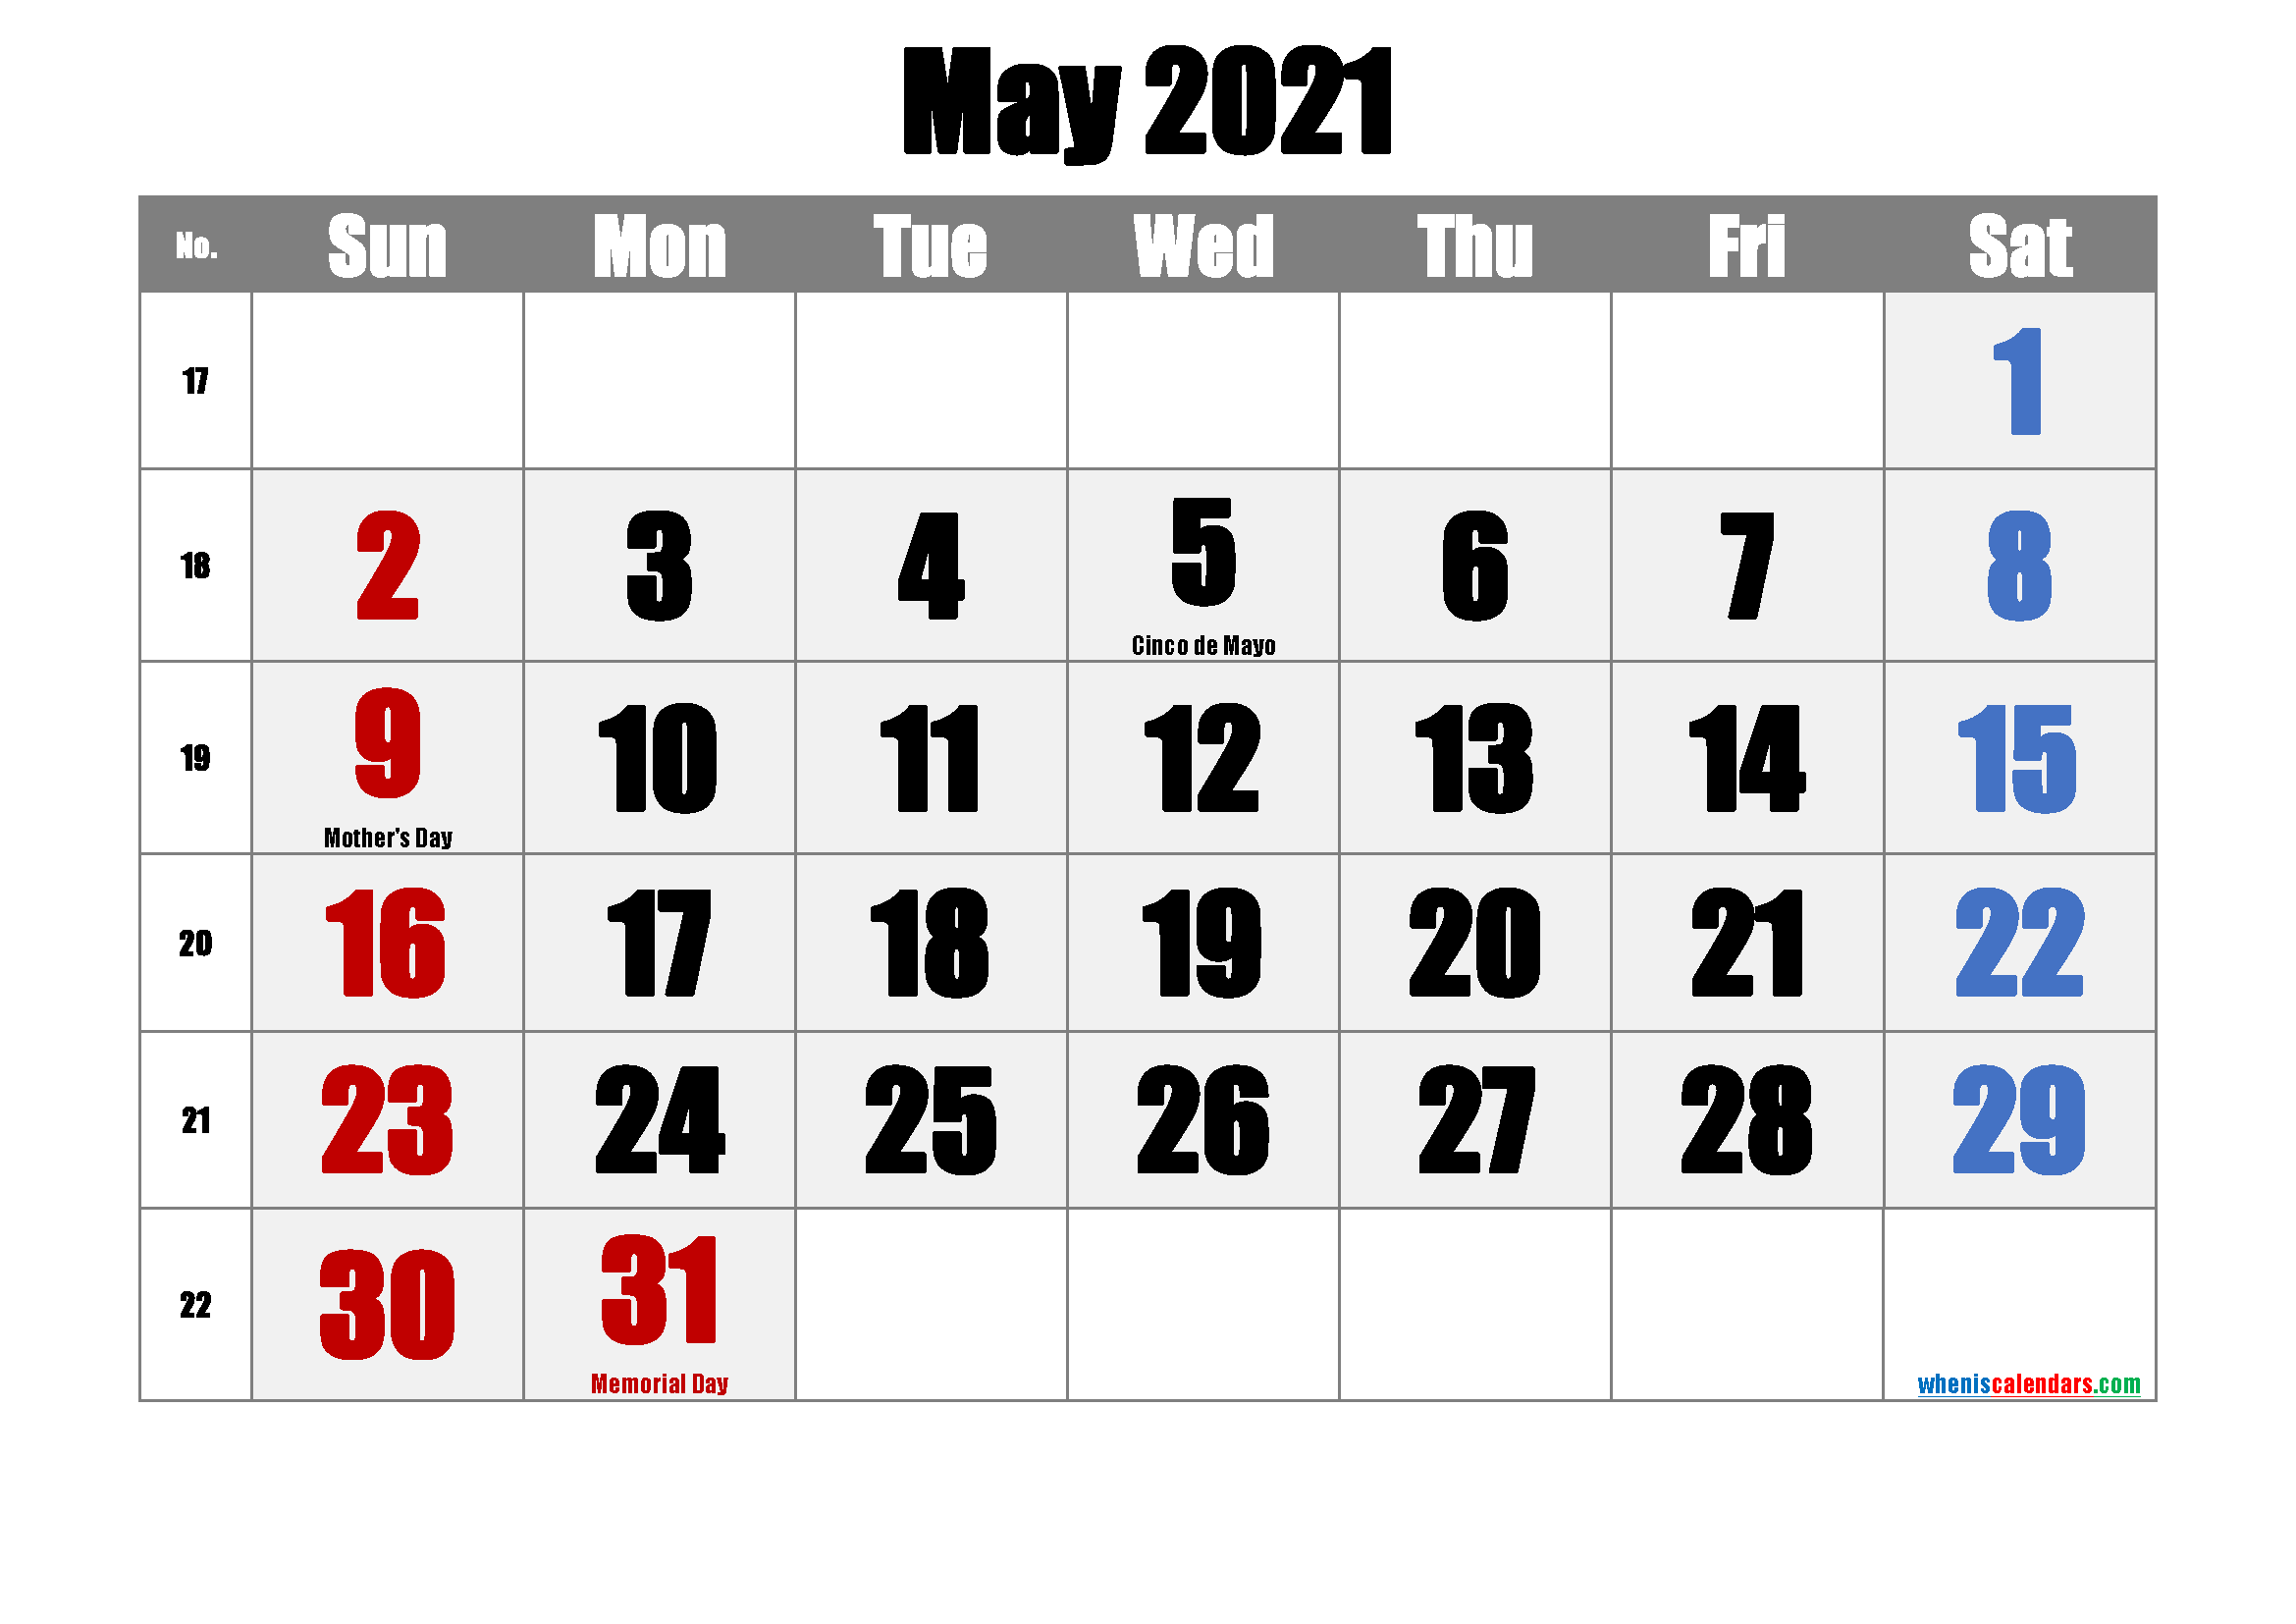 MAY 2021 Printable Calendar with Holidays